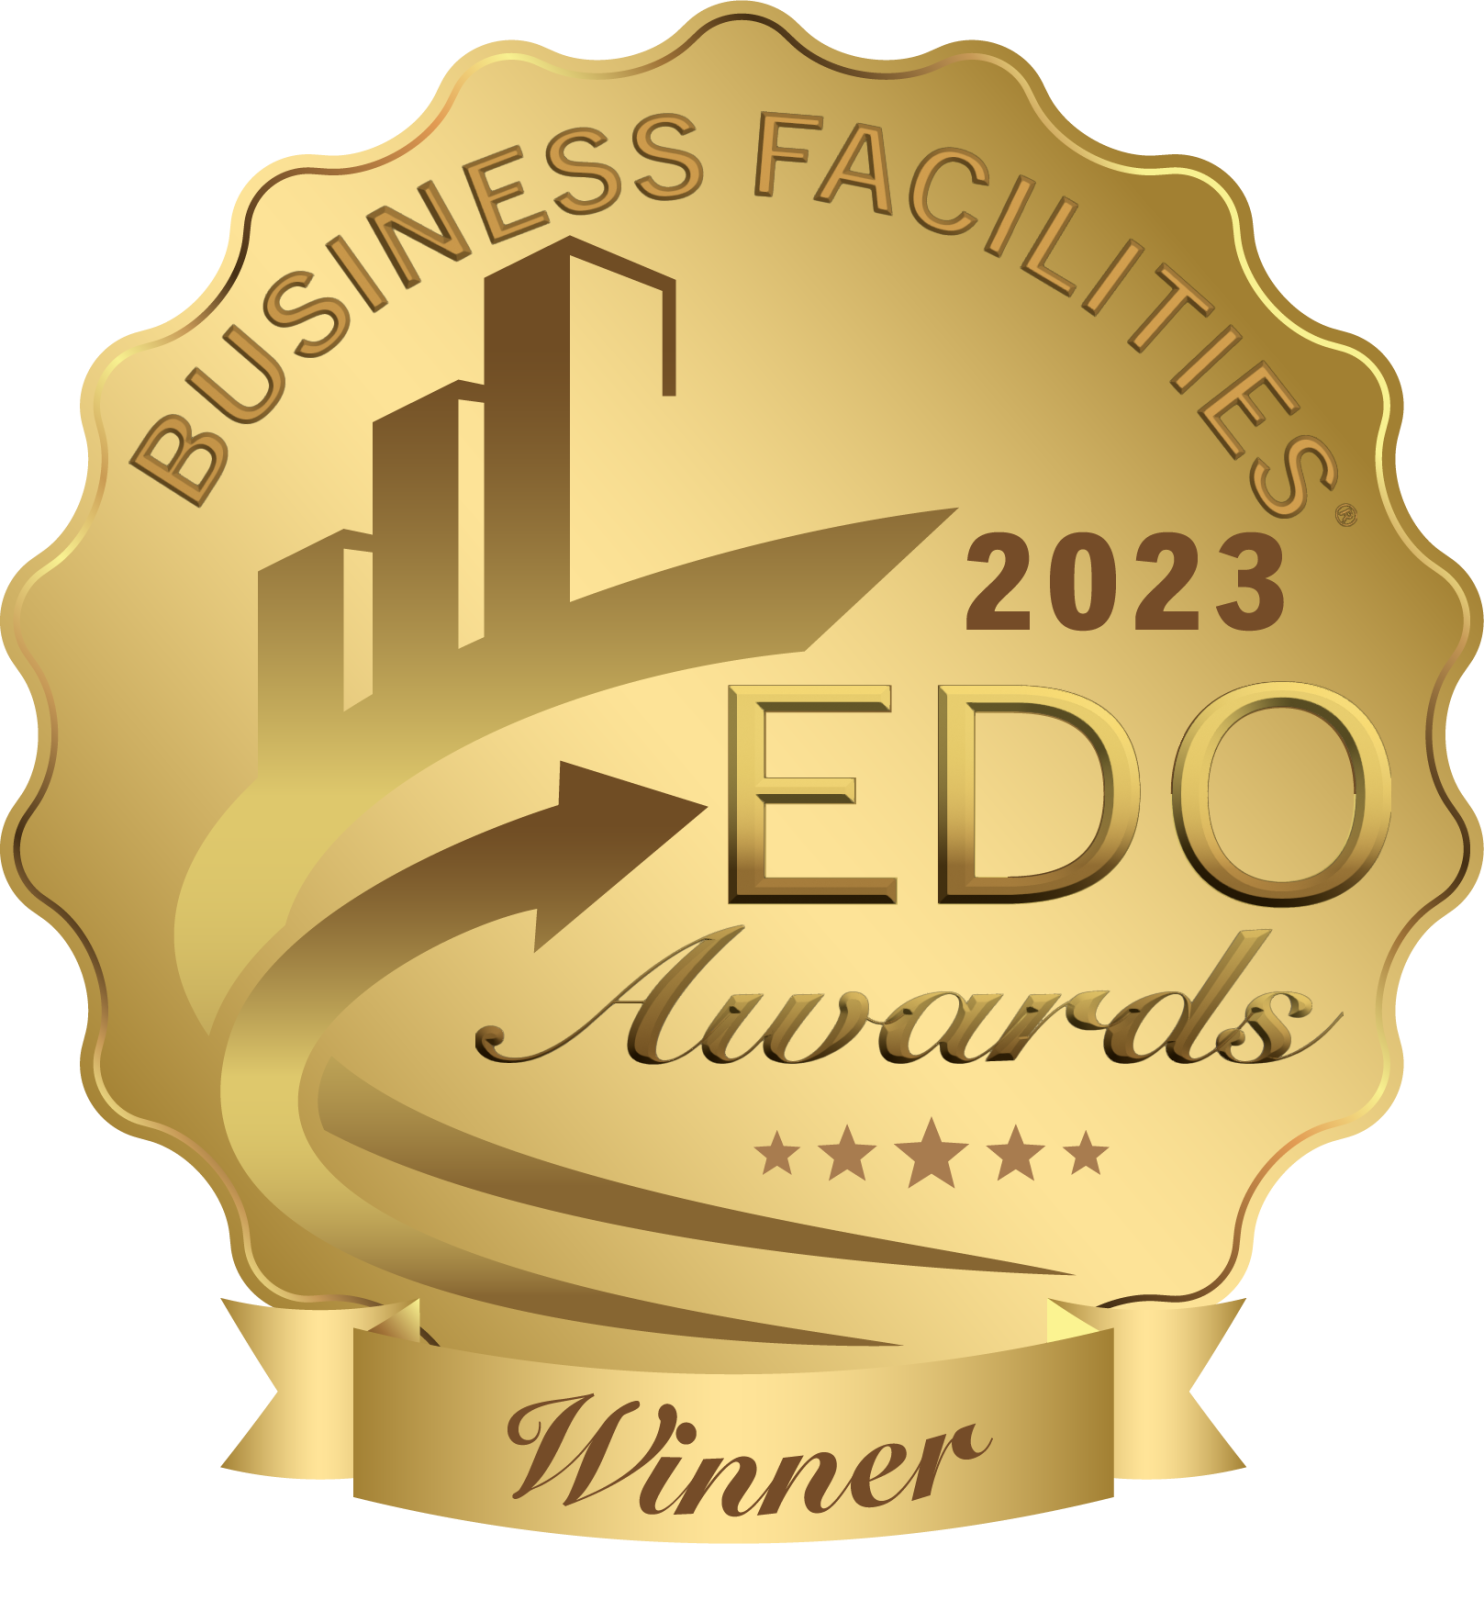 Pflugerville Community Development Corporation wins EDO Award 2023 from Business Facilities Photo